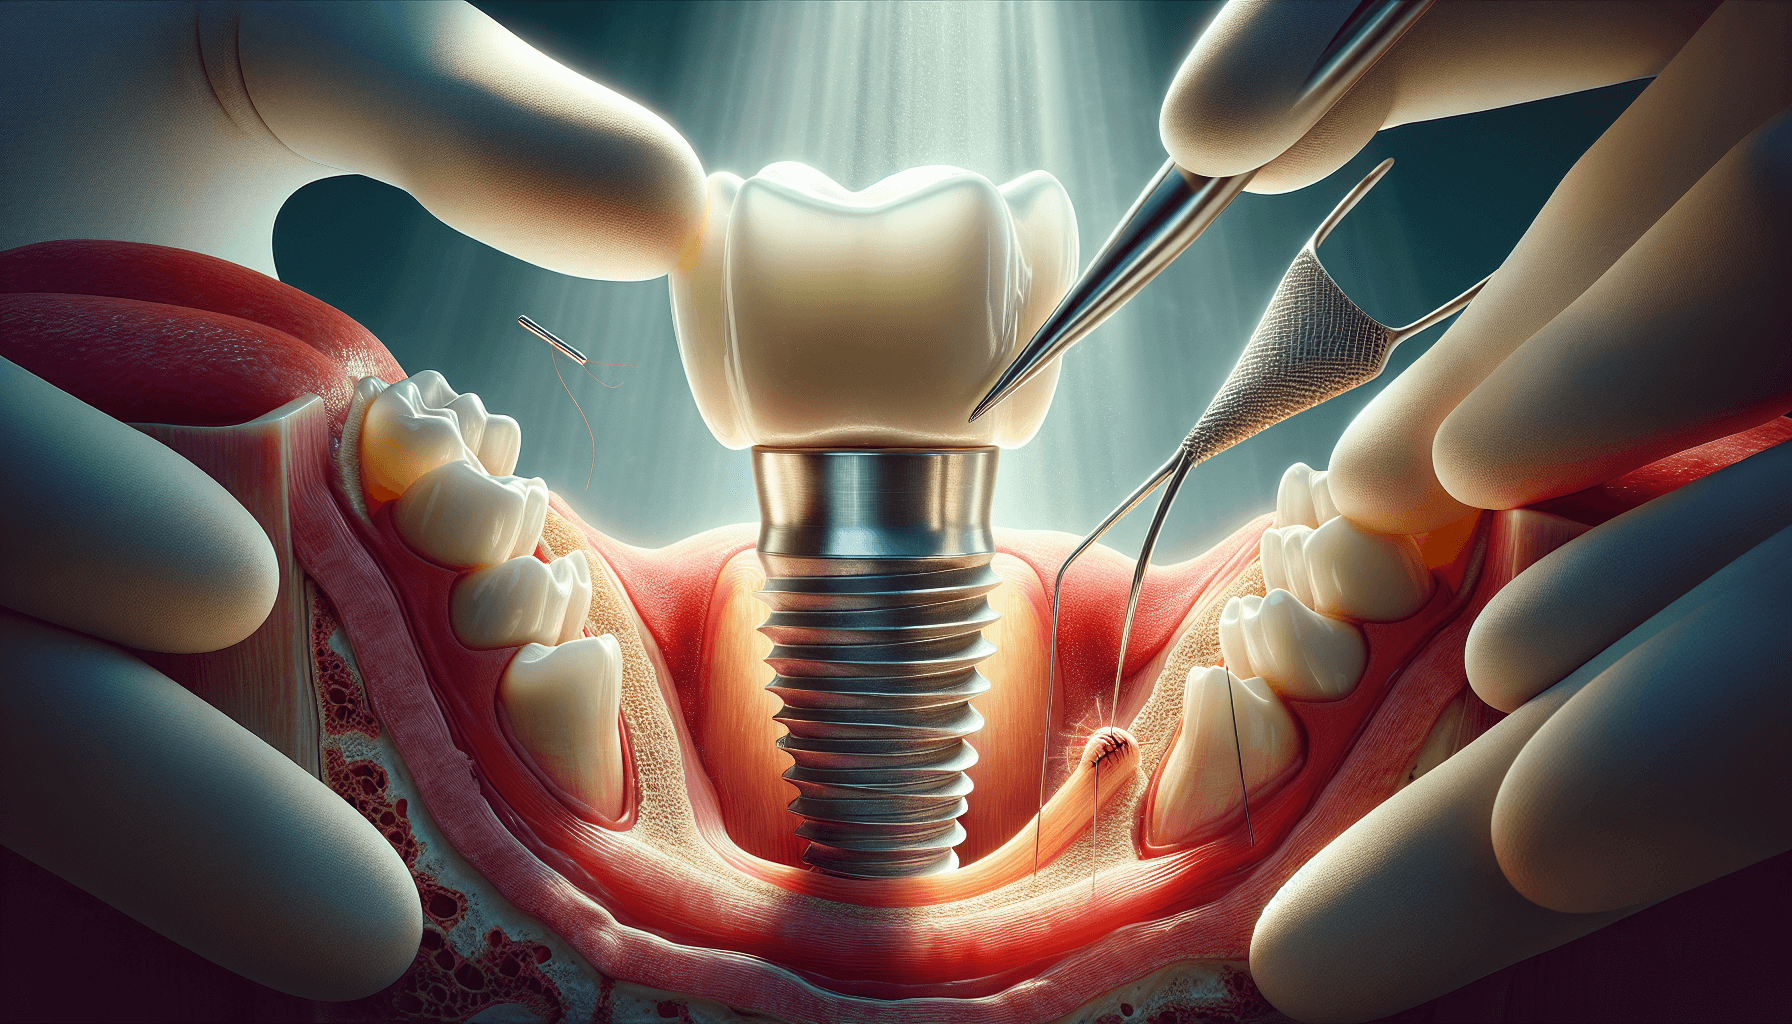 Surgical procedure for dental implants